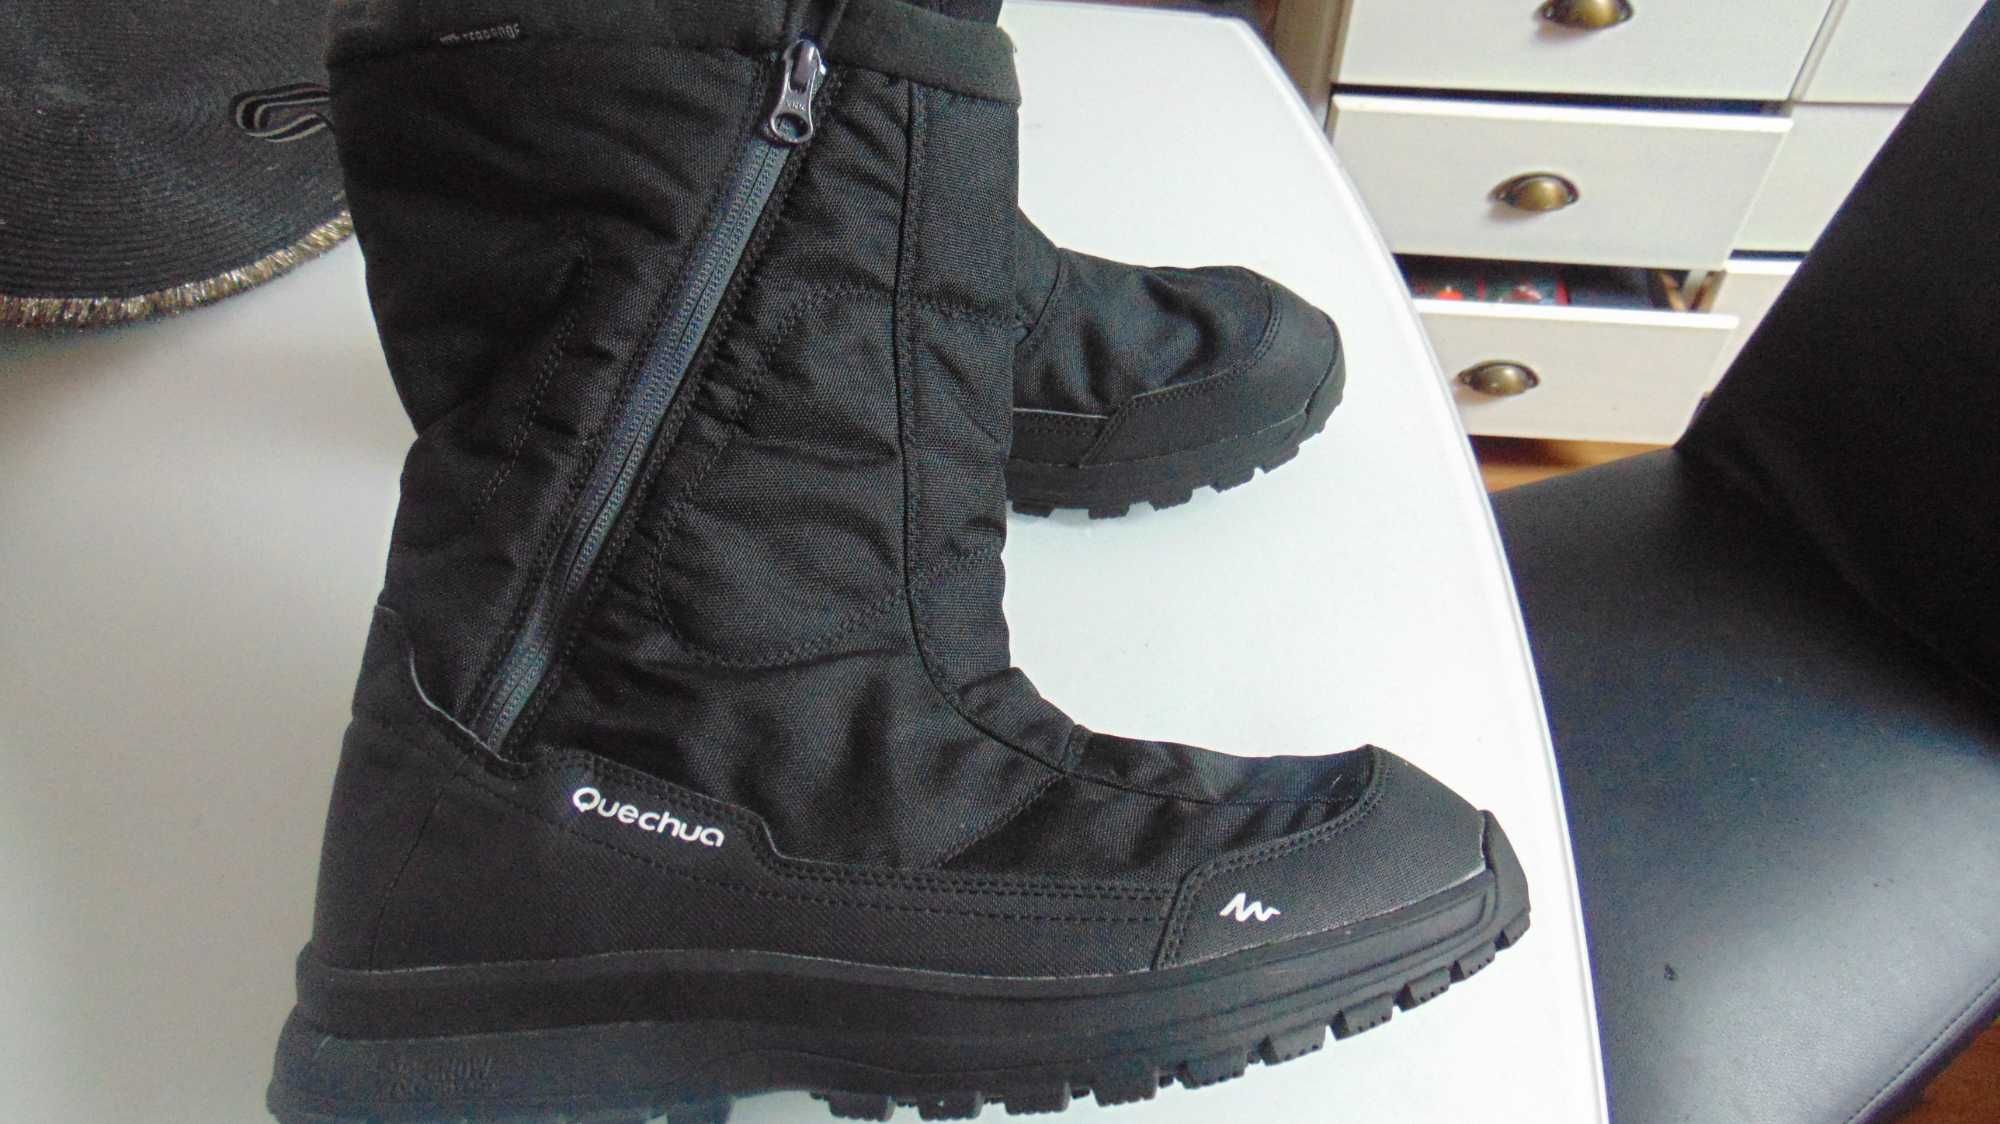 Quechua Boots SH100 waterproof roz uk12 eur 47 jak nowe